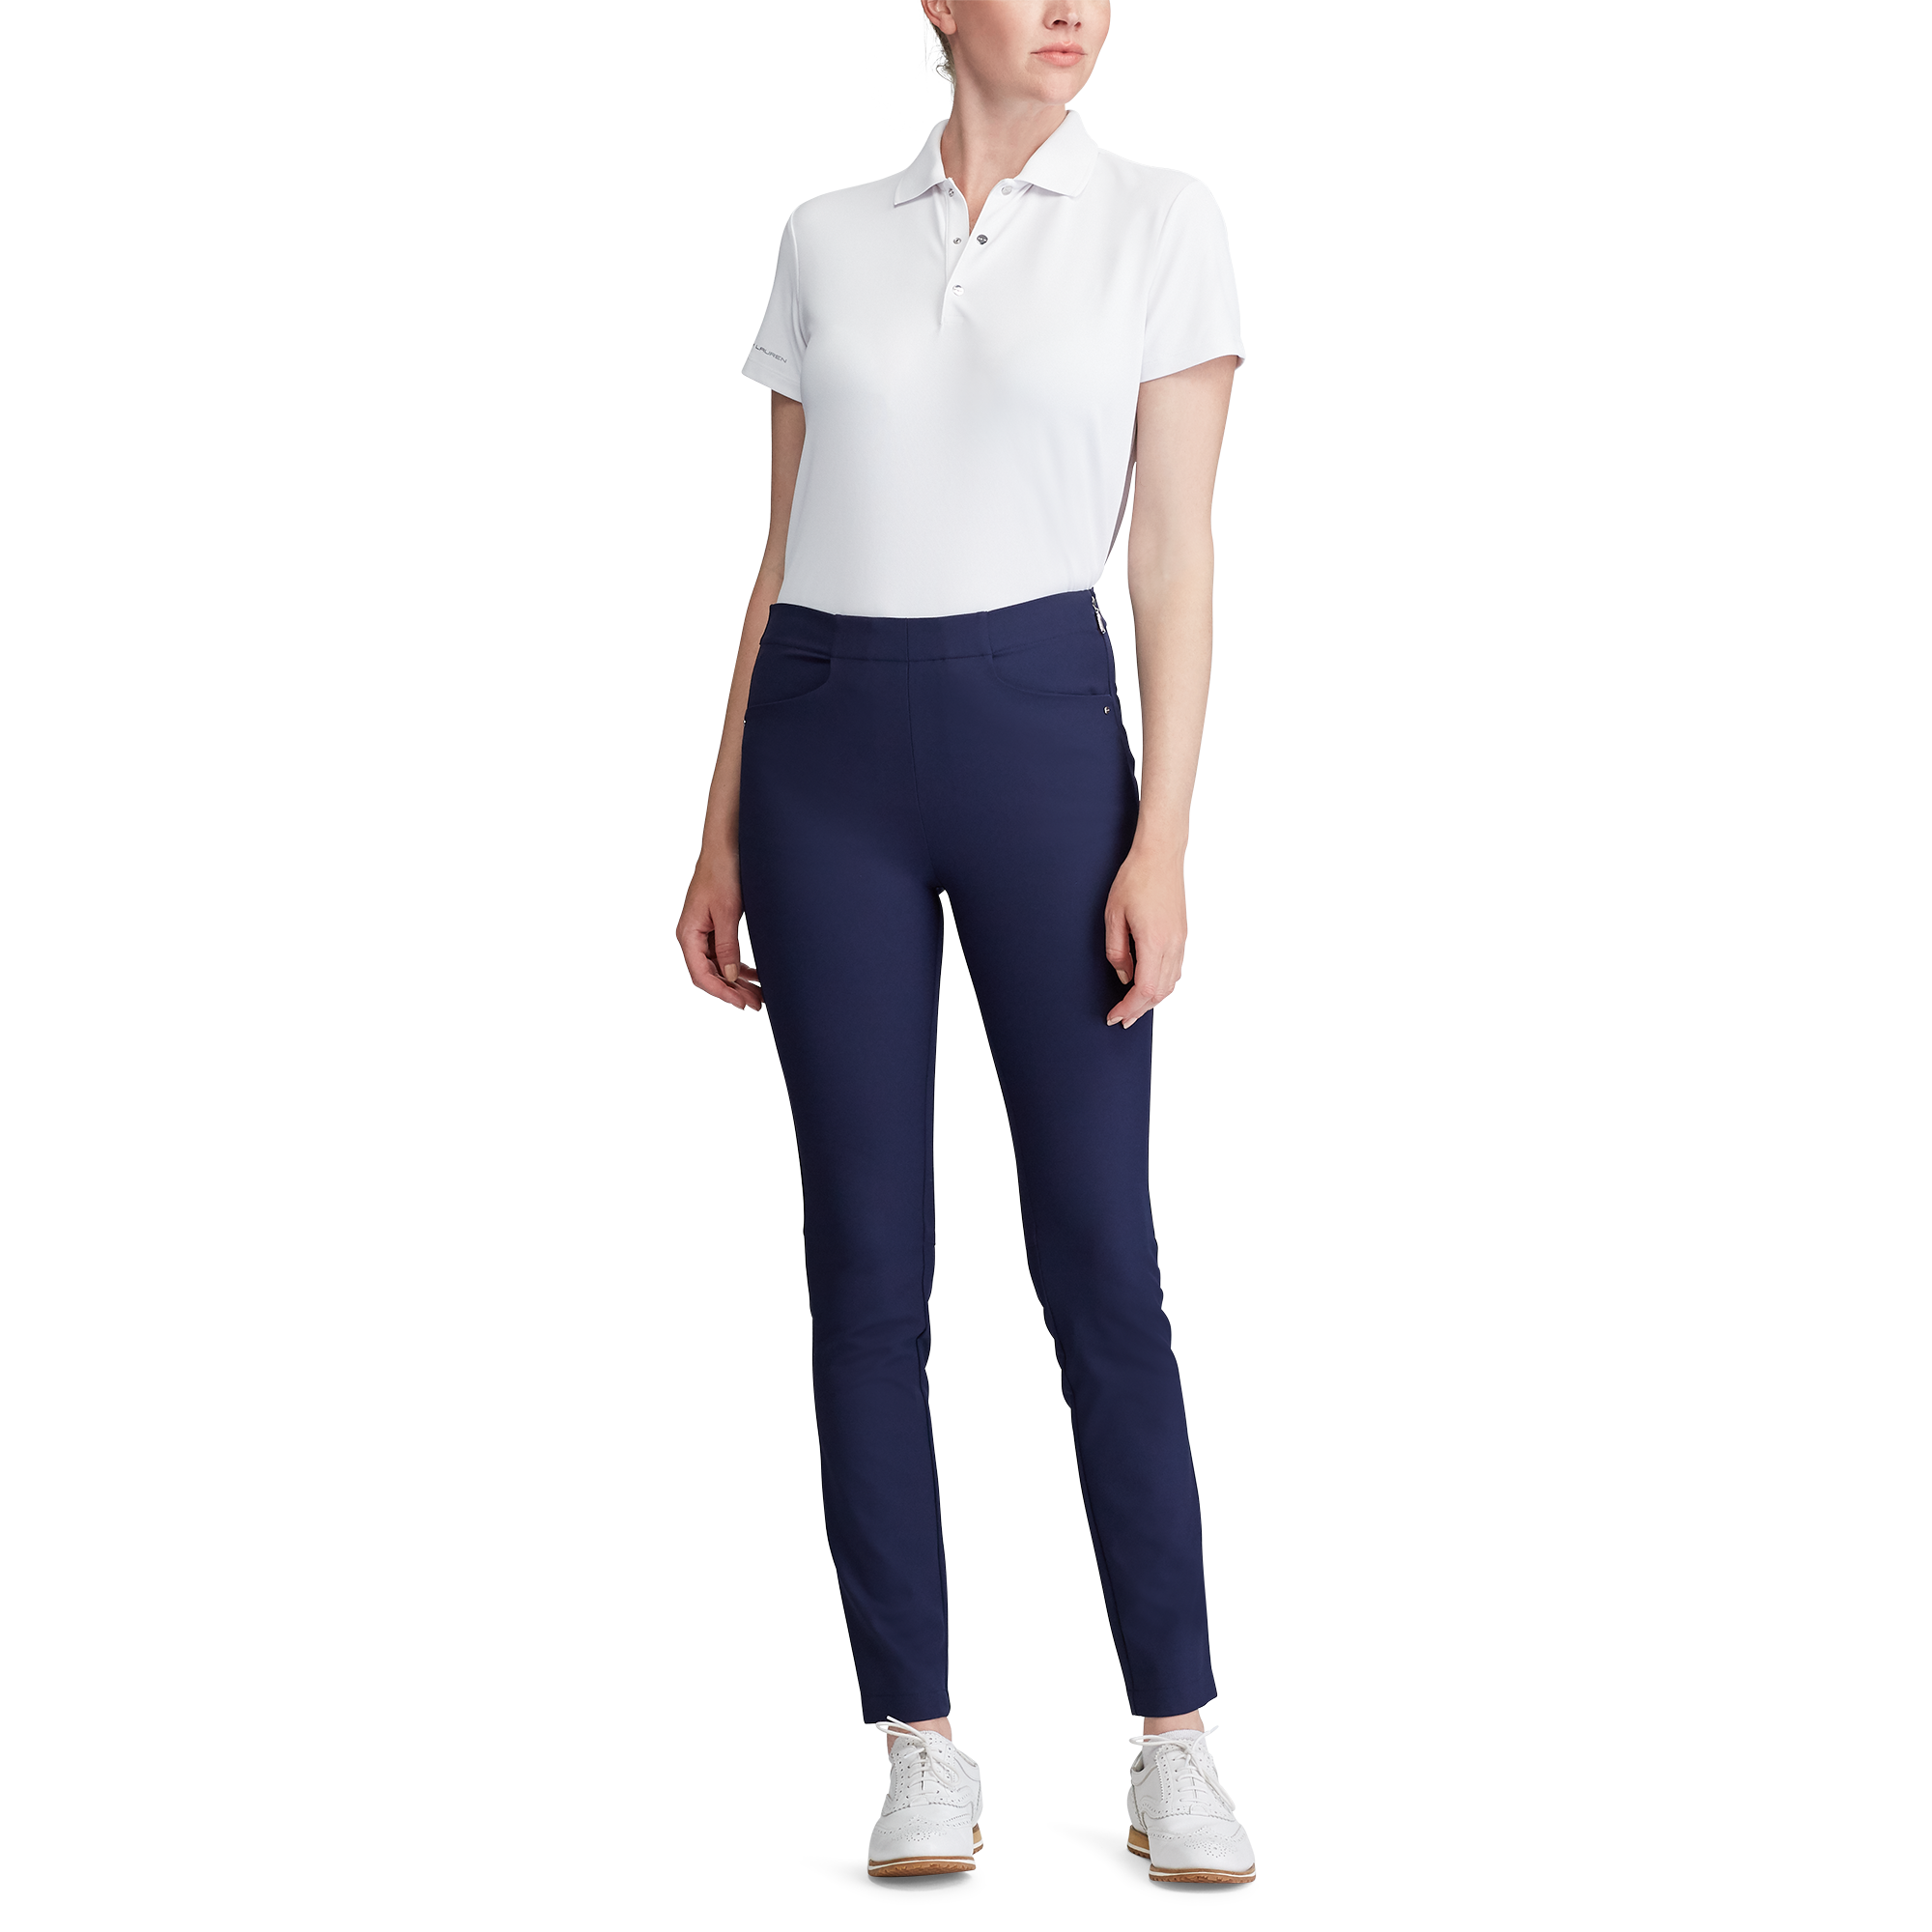 GG BLUE Pink Coolmax Stretch Golf Athletic Capri Pants w/ 4 Pockets Size 6